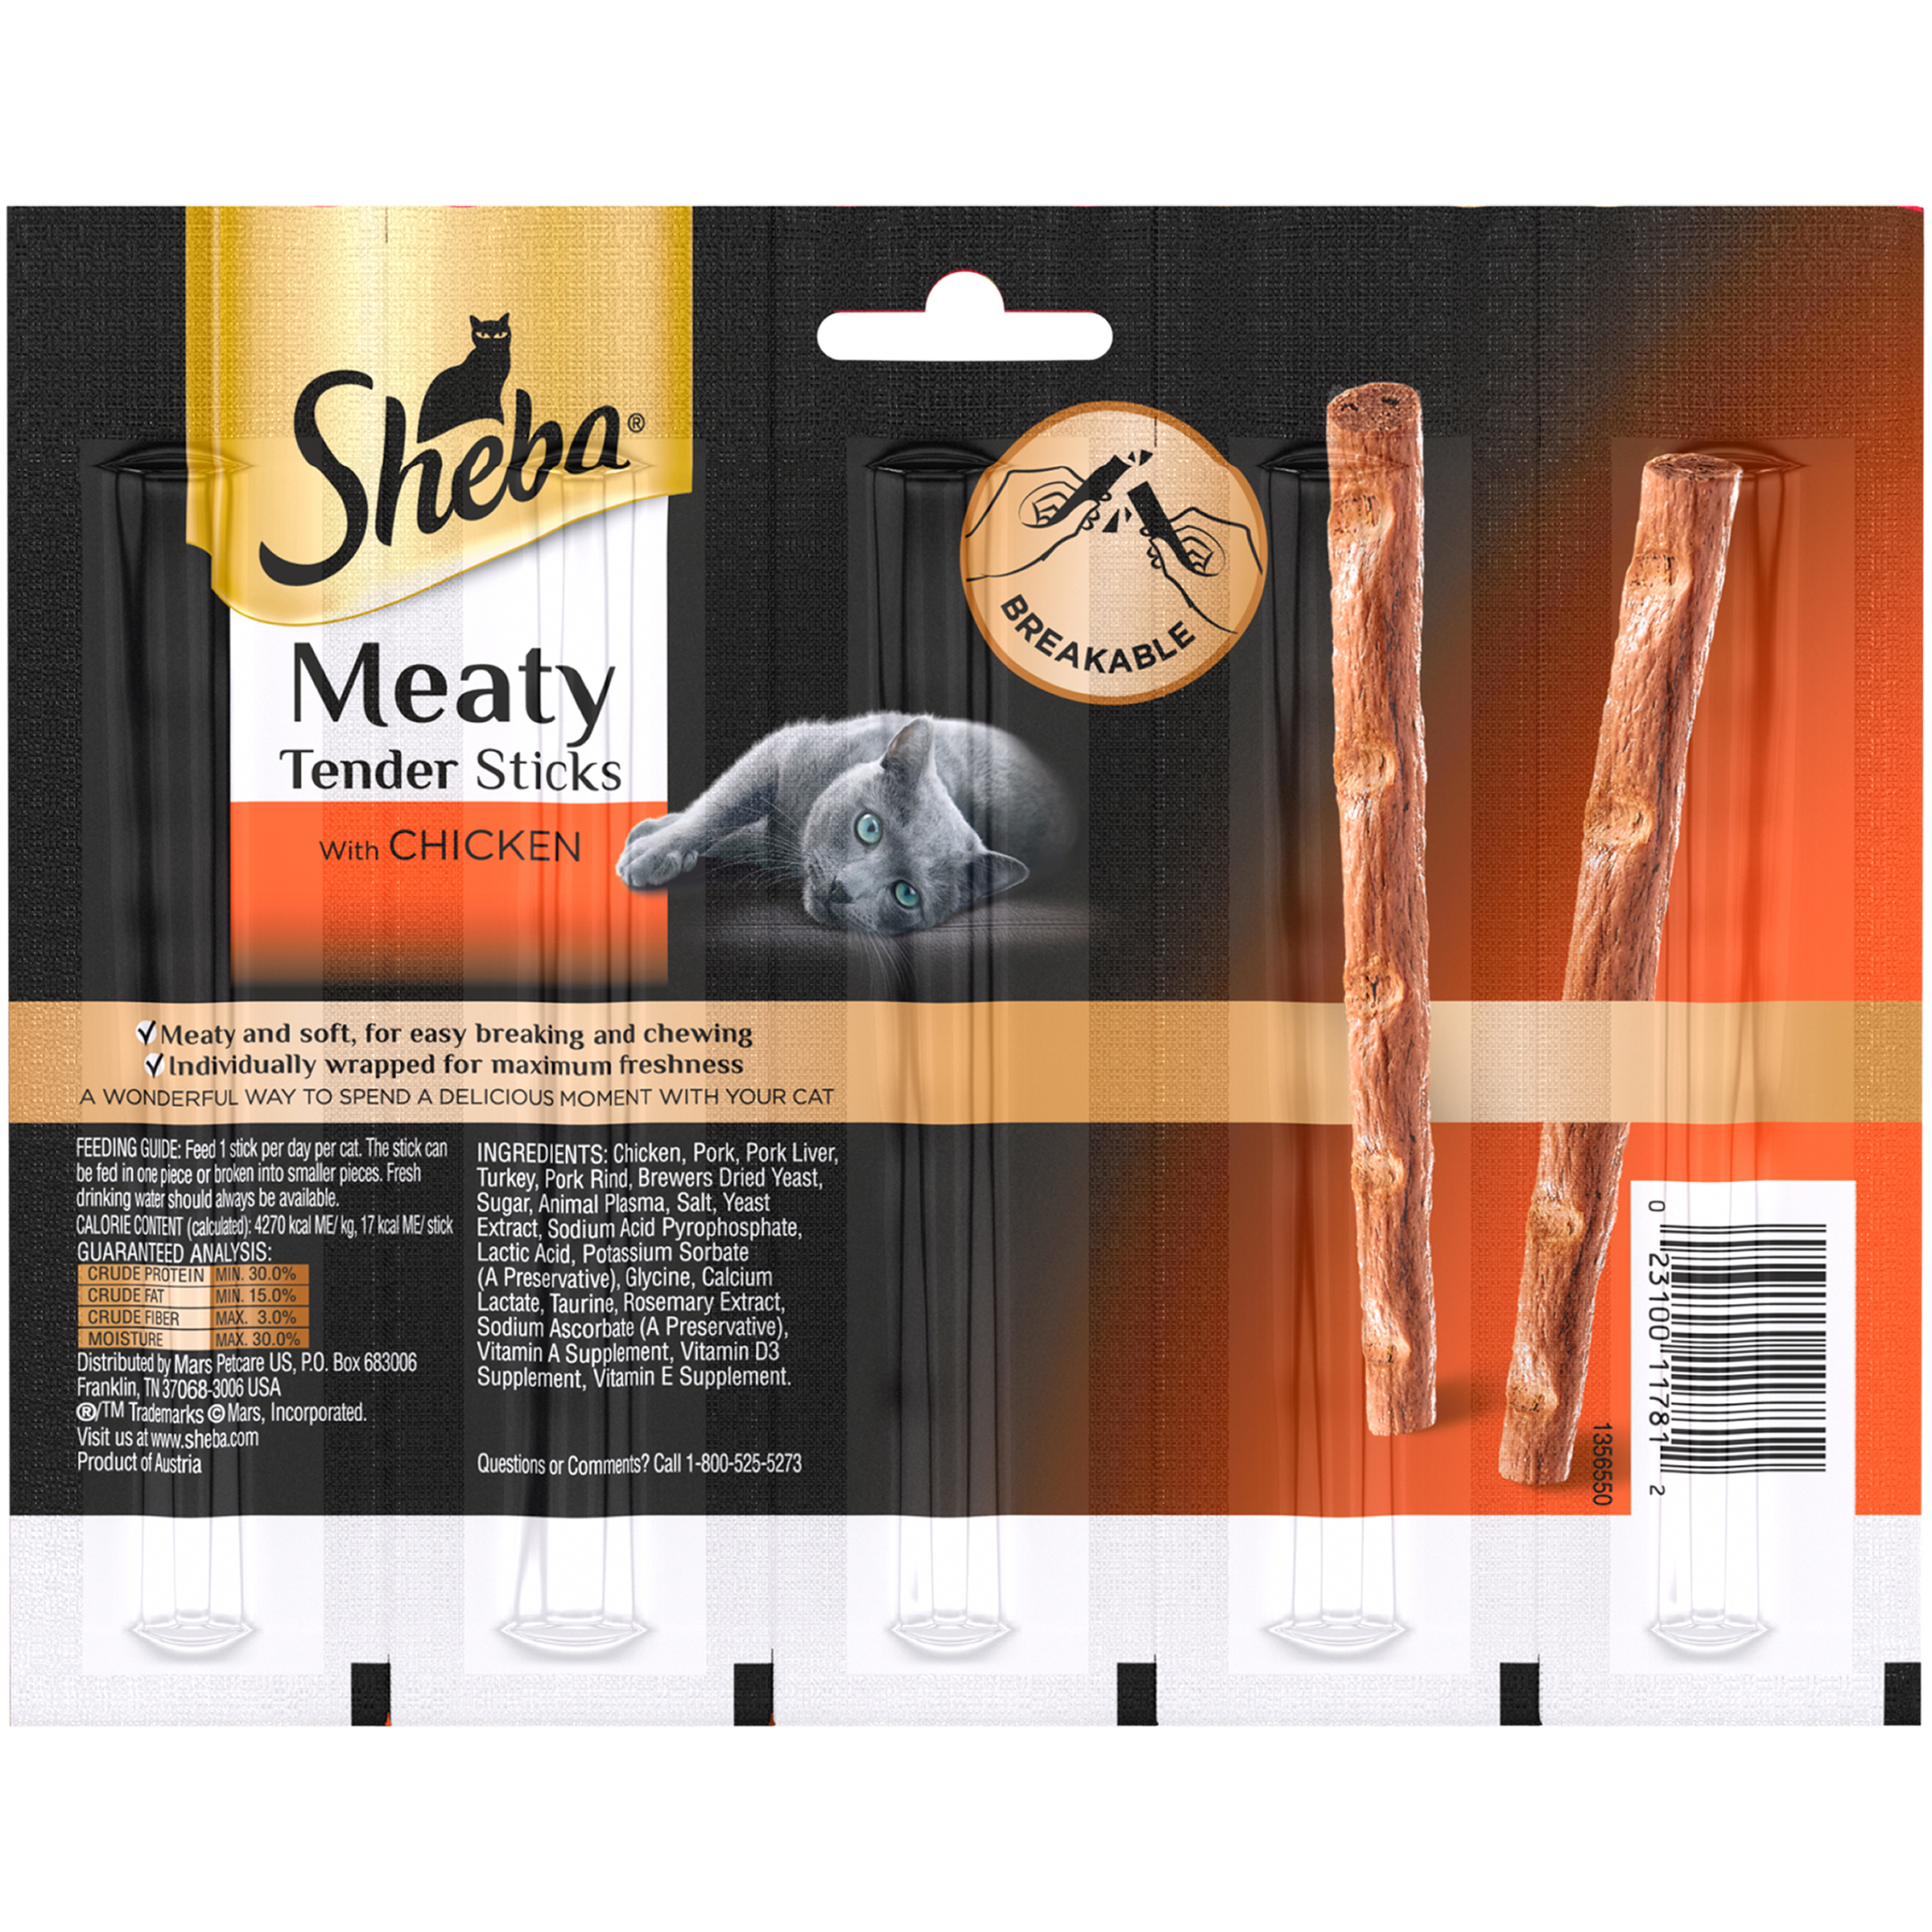 Sheba Meaty Tender Sticks with Chicken Cat Treats 5-0.14 oz. Sticks